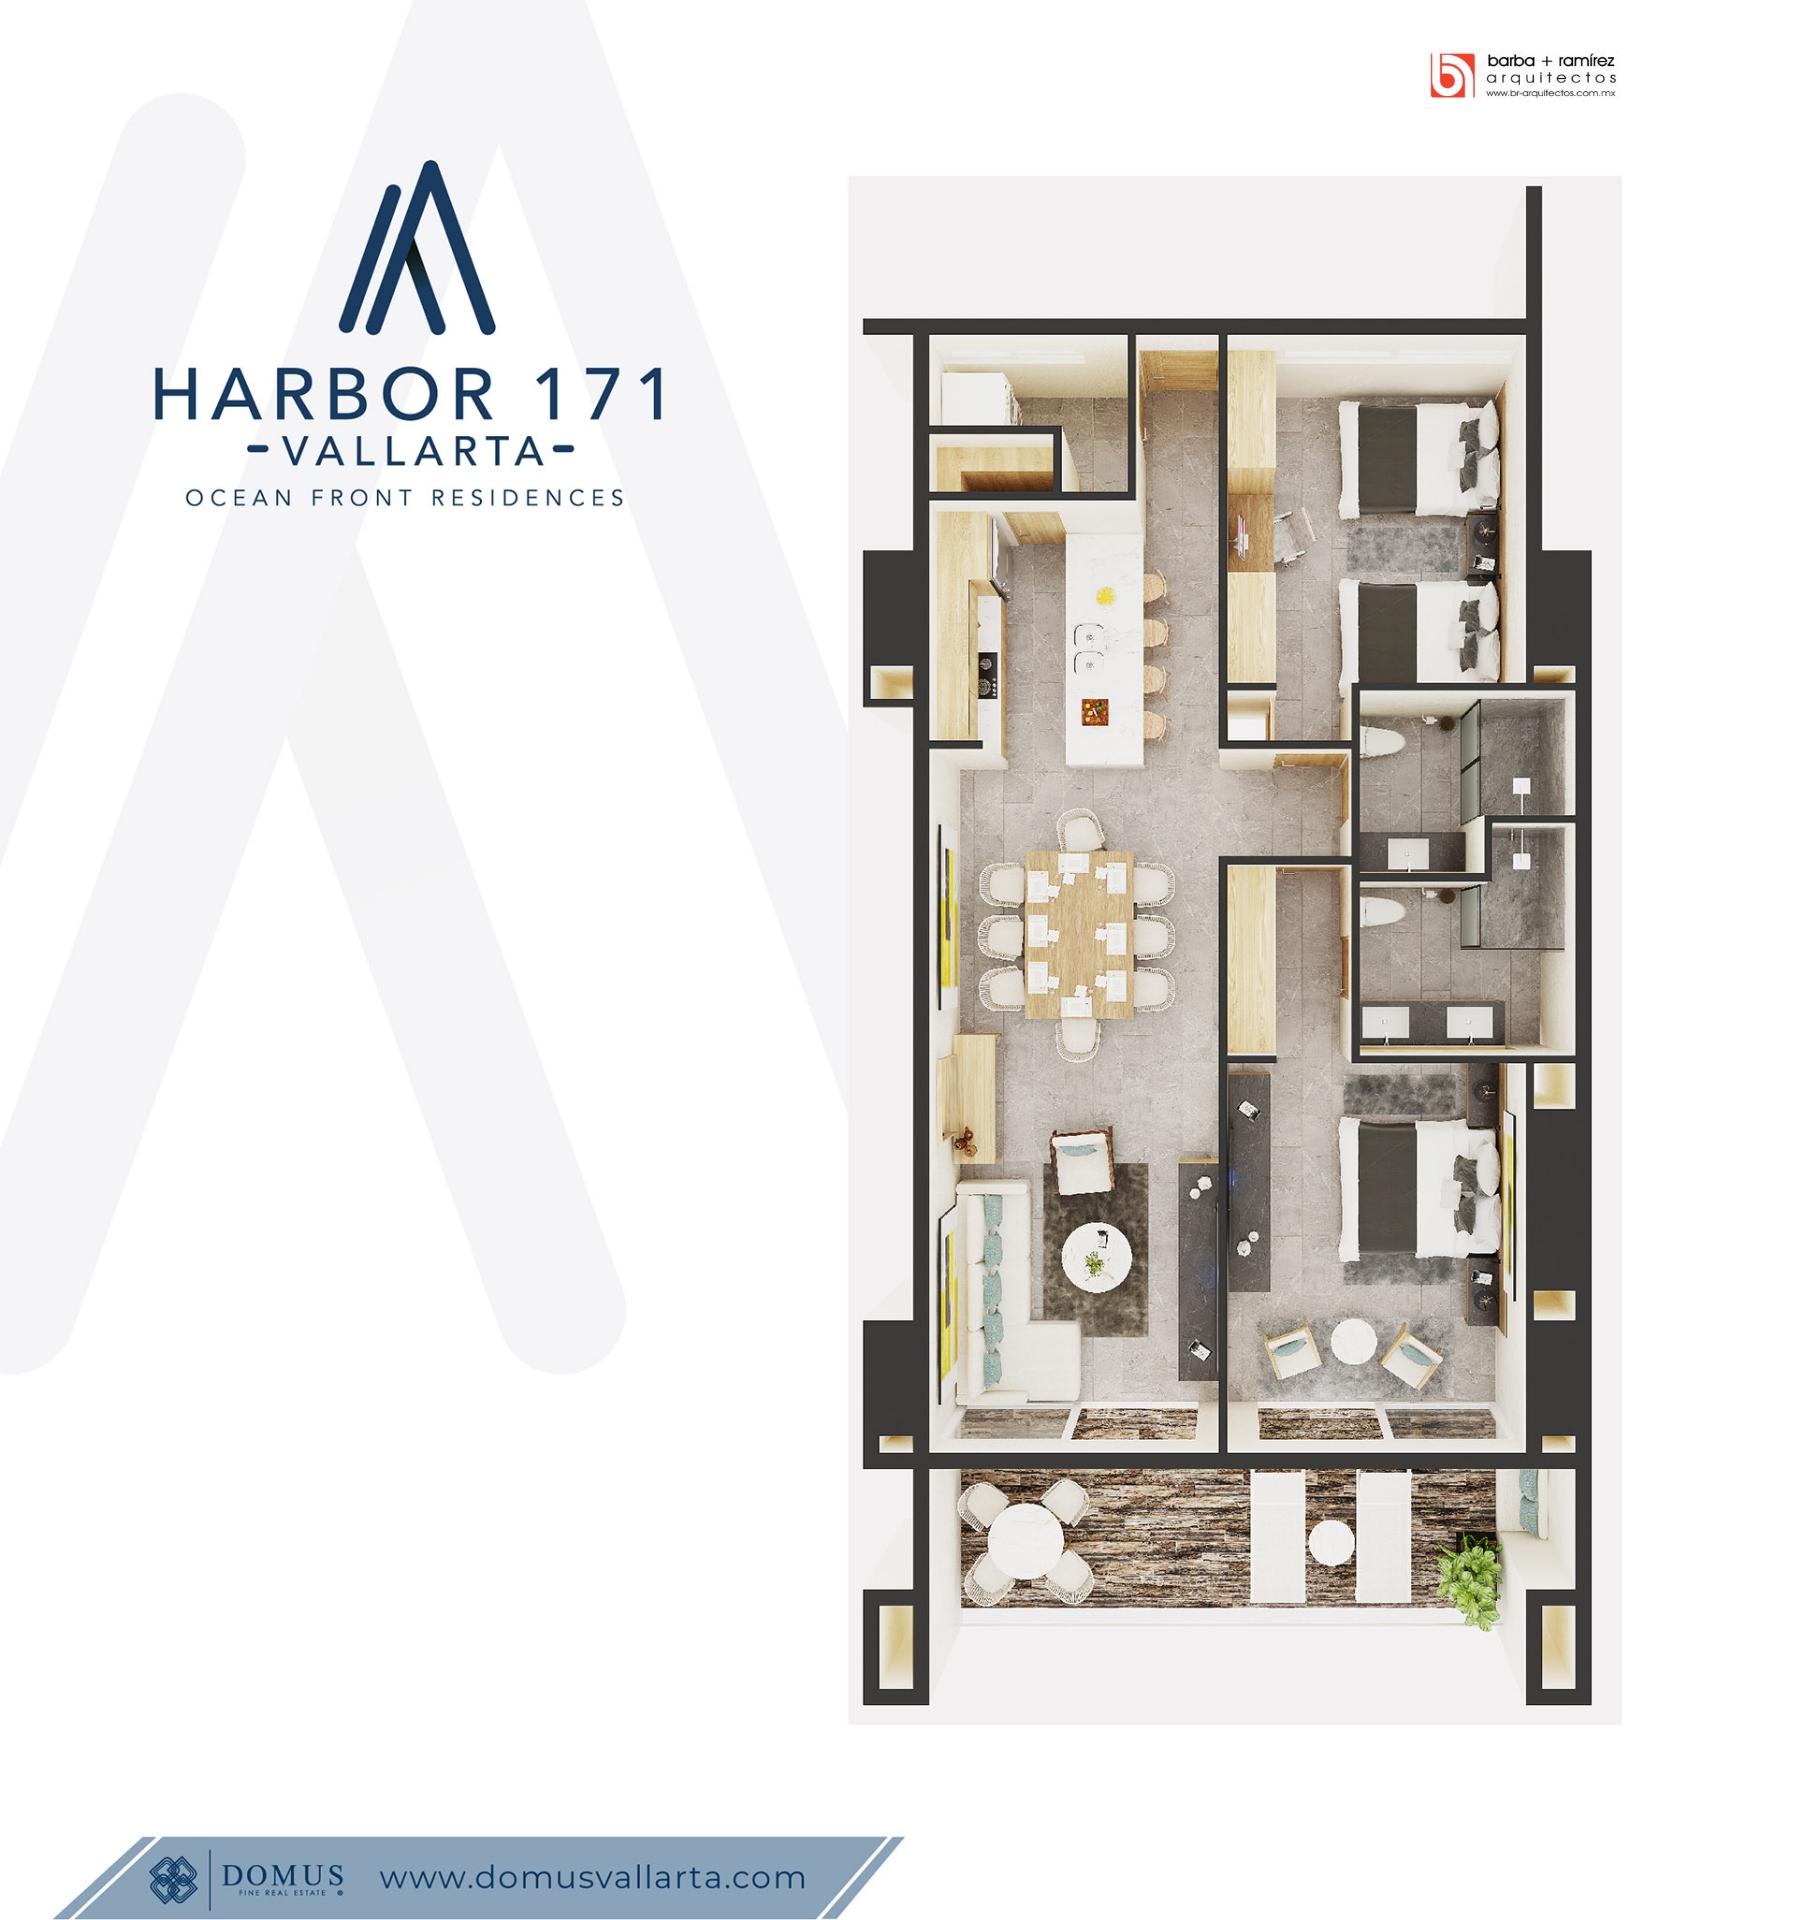 Unit 1406 Blueprint - Harbor 171